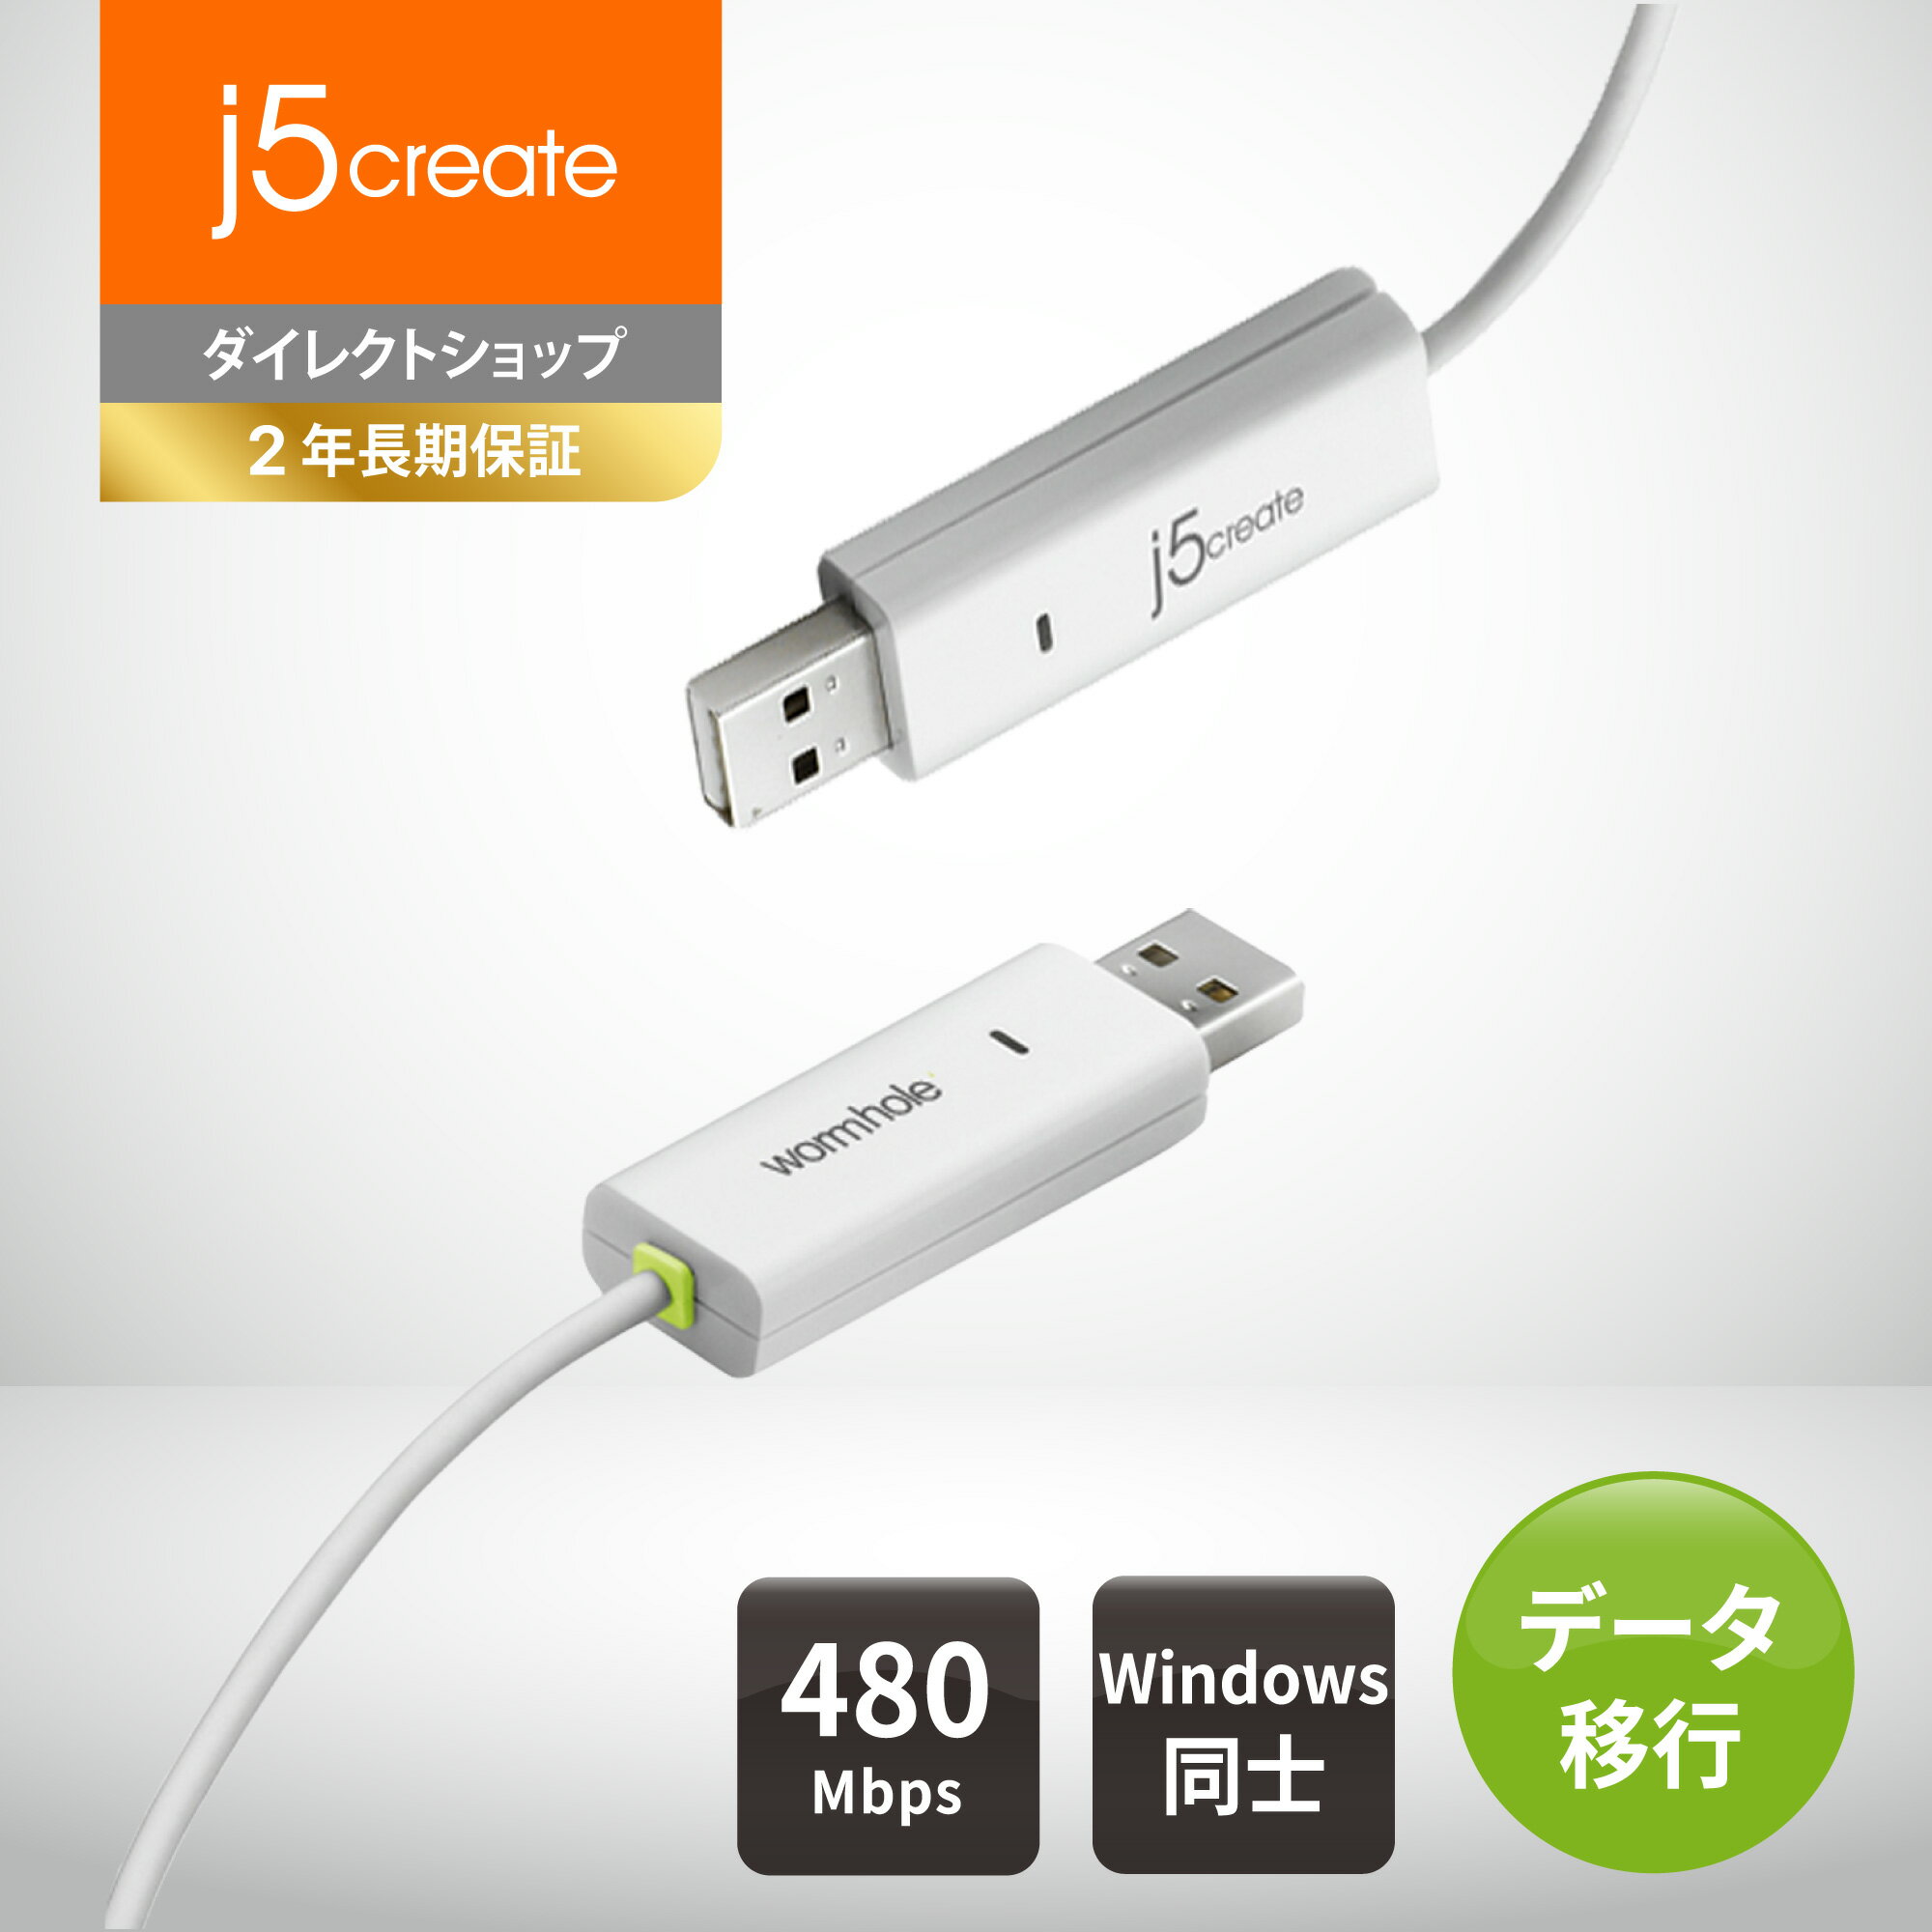 j5 create リンクケーブル USB2.0 WORMHOLE SWITCH 1.8m JUC100-EJ  データ転送速度480Mb/S Windows 7以降対応